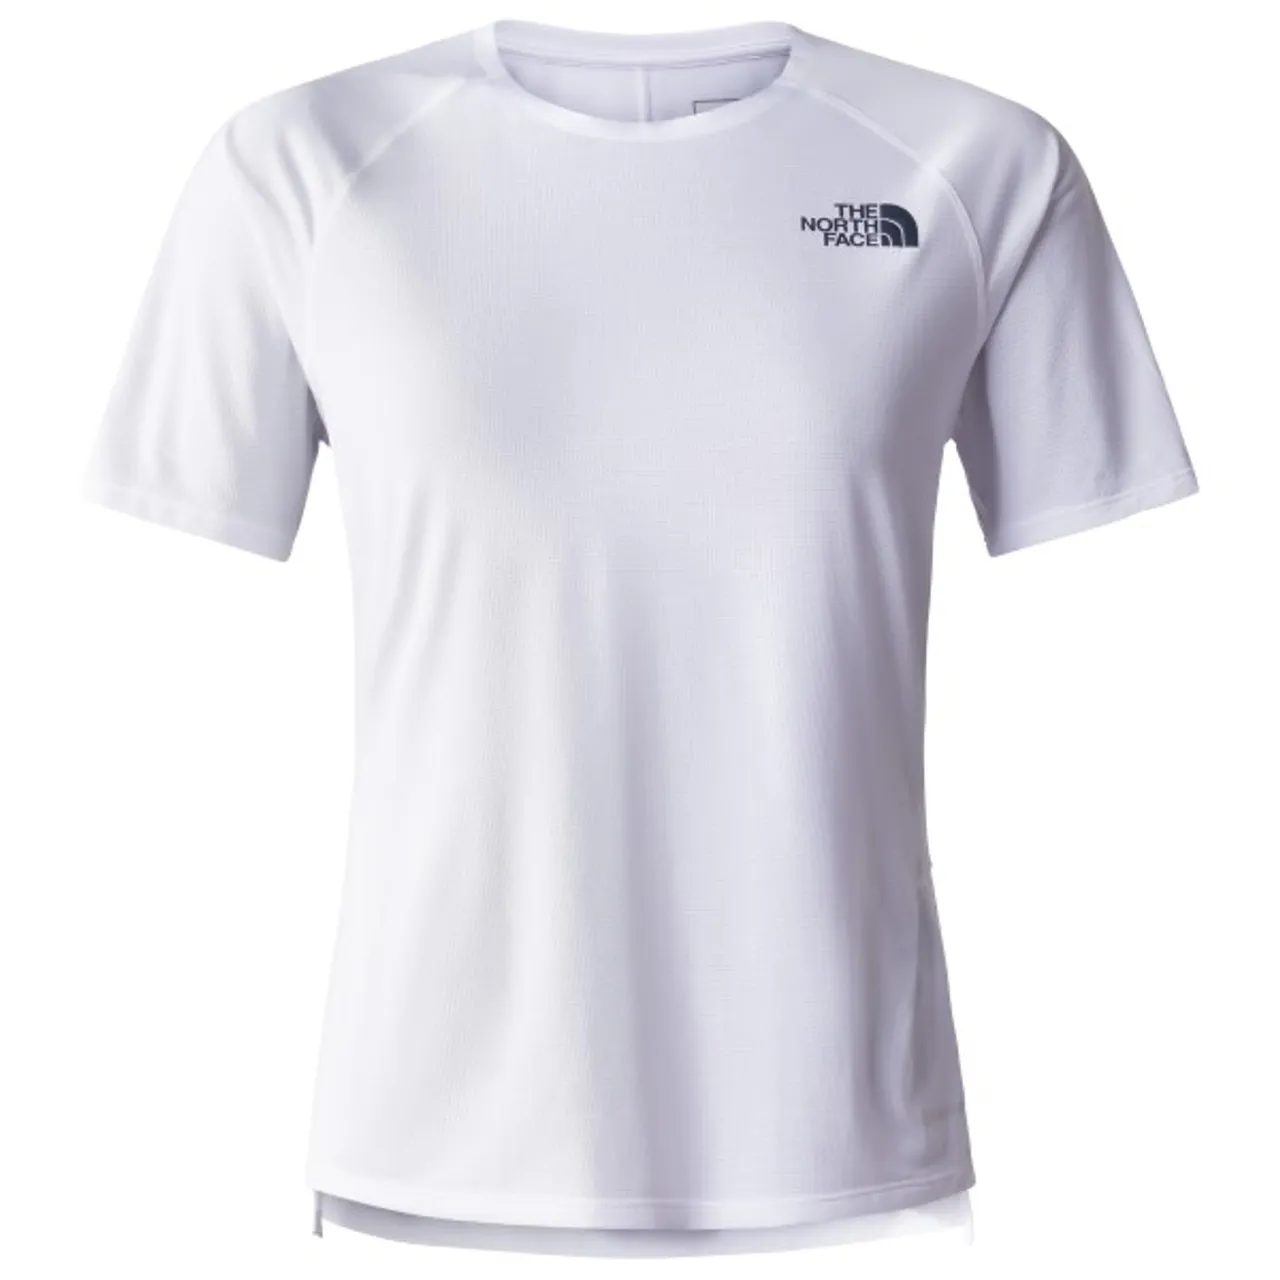 The North Face - Women's Summit High Trail Run S/S - Sport shirt